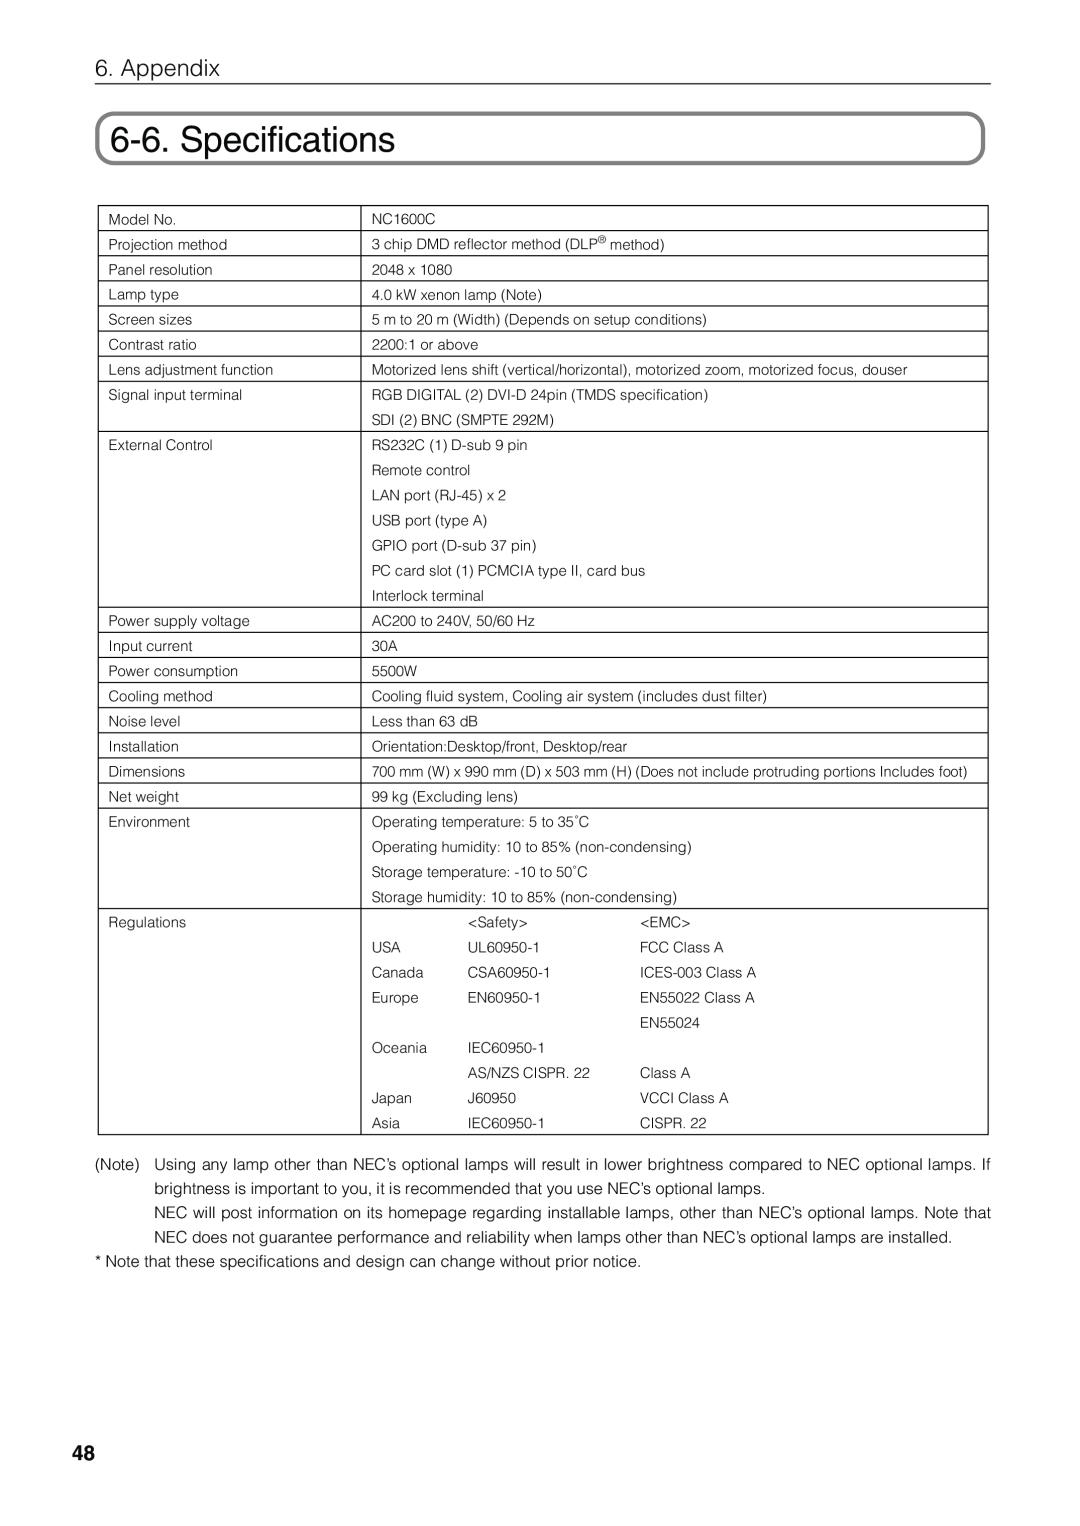 NEC NC1600C user manual Specifications, Appendix 